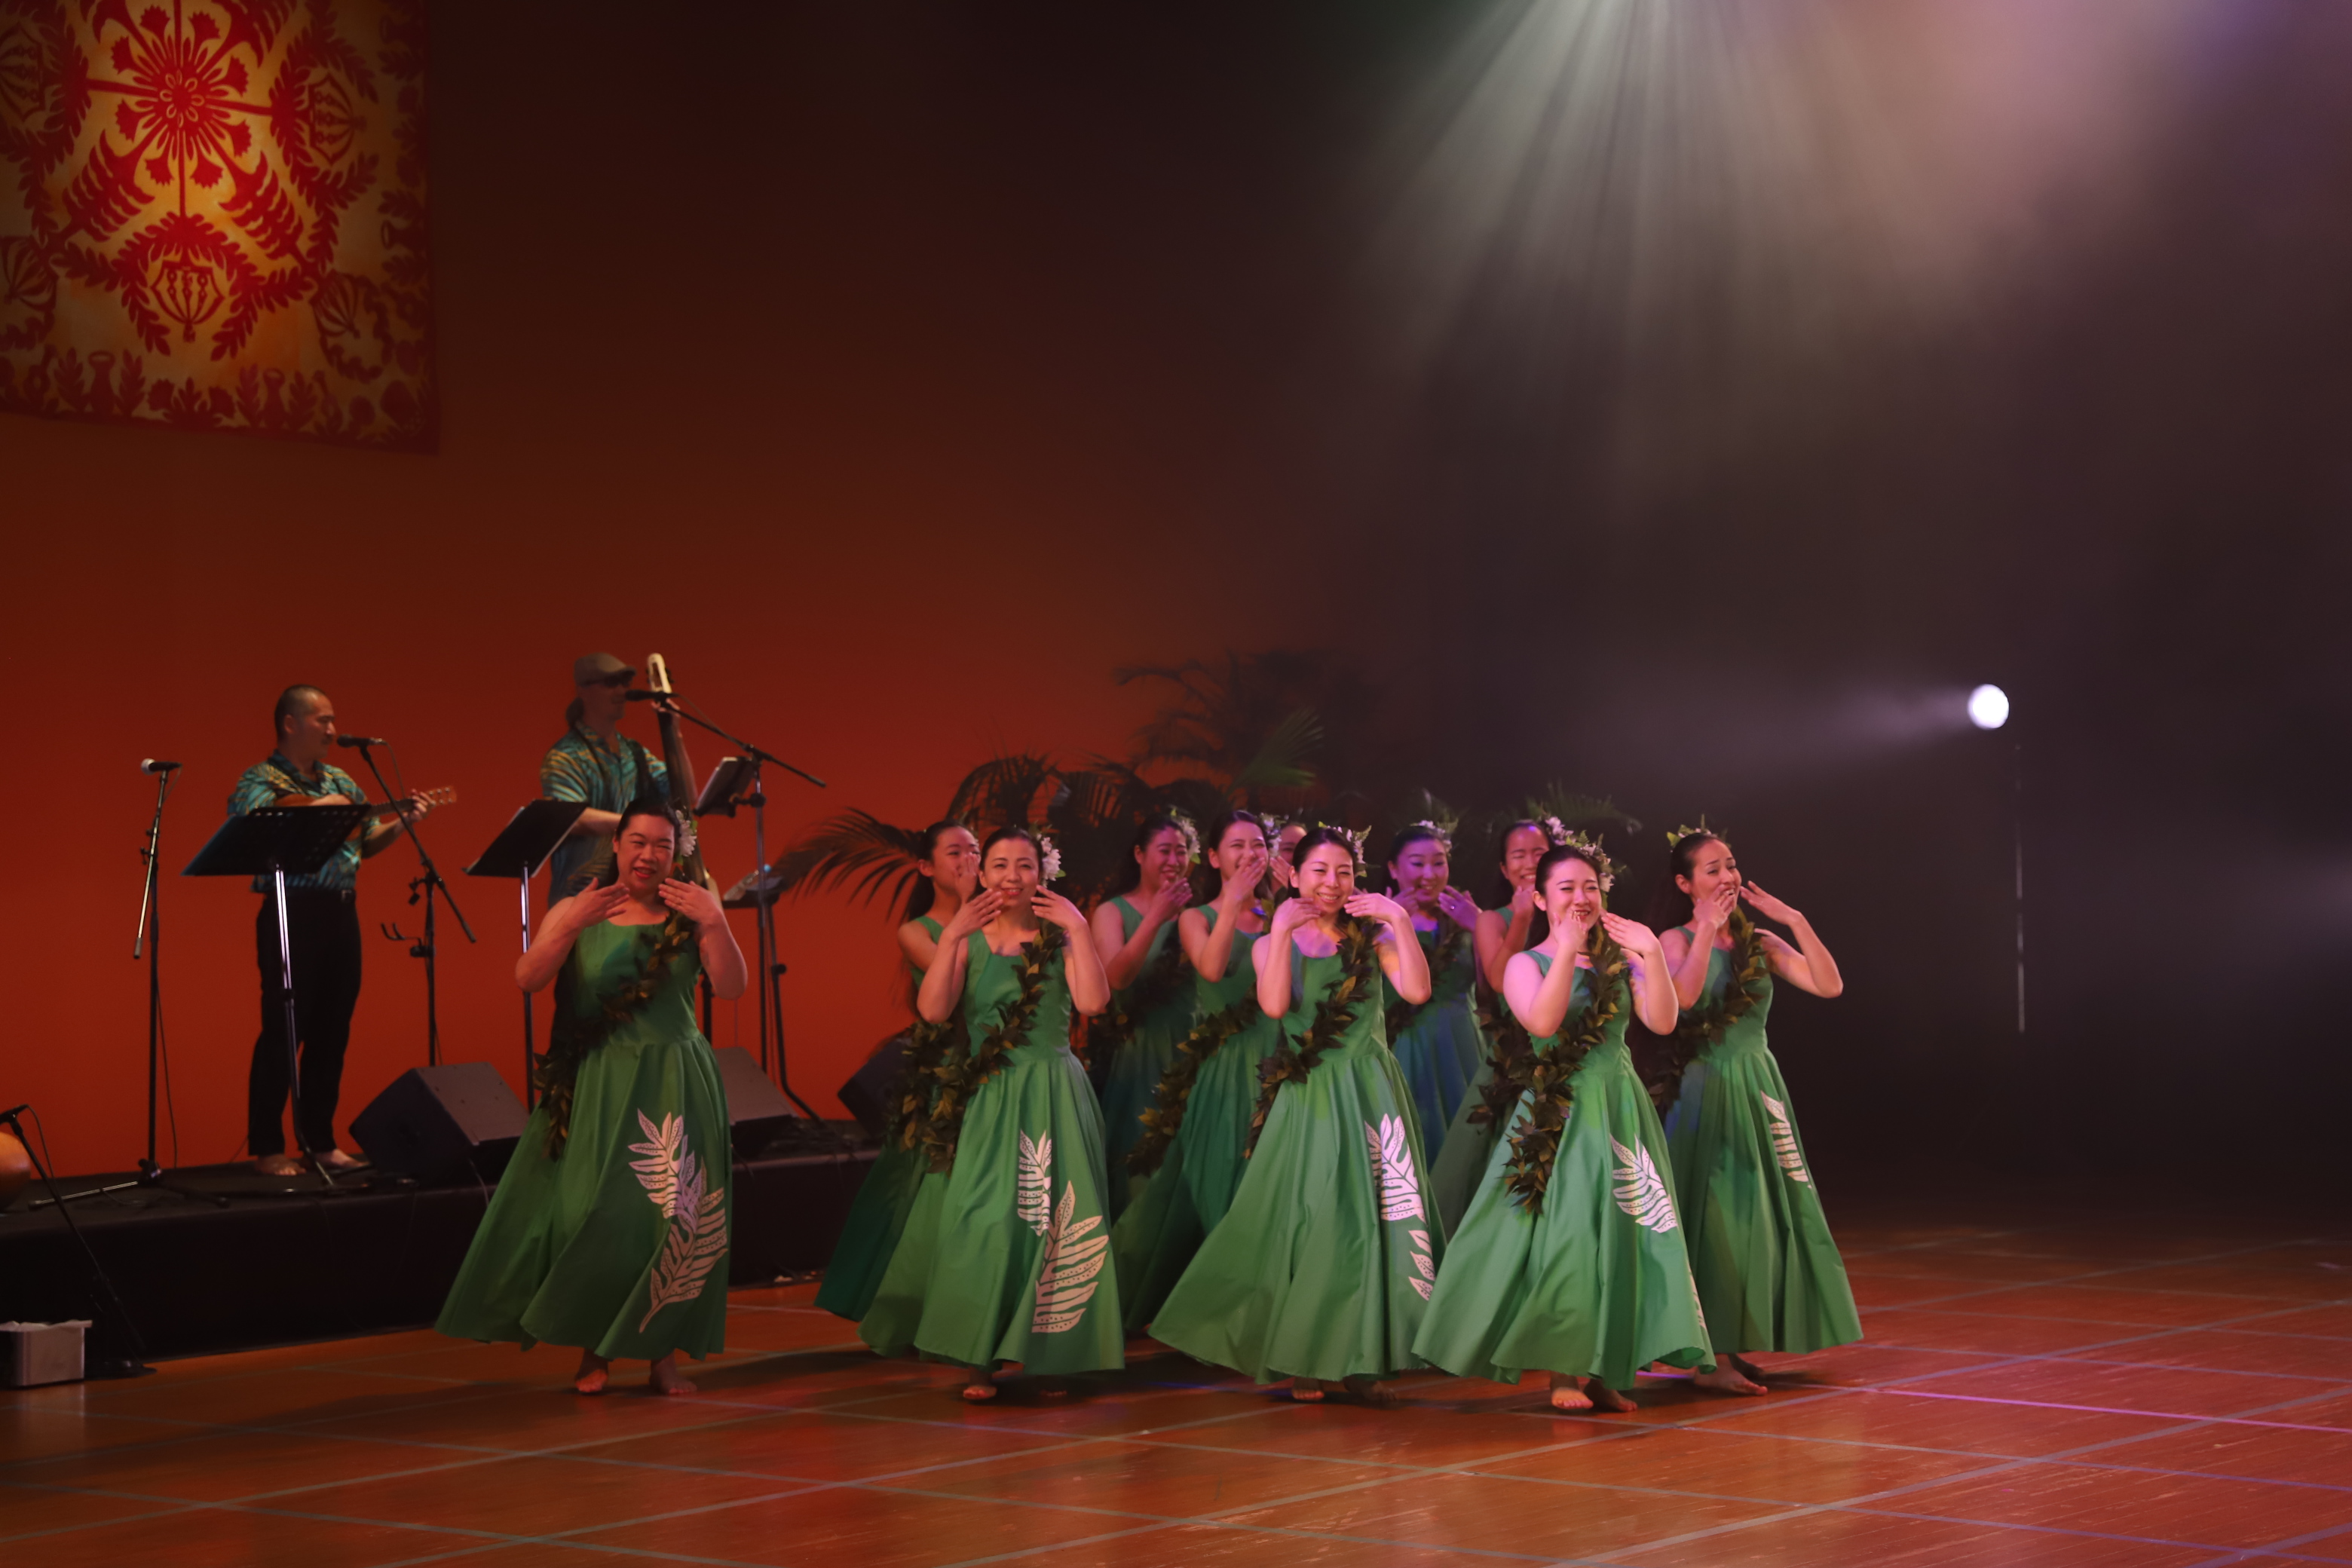 Hula dancing troupe from Fukui